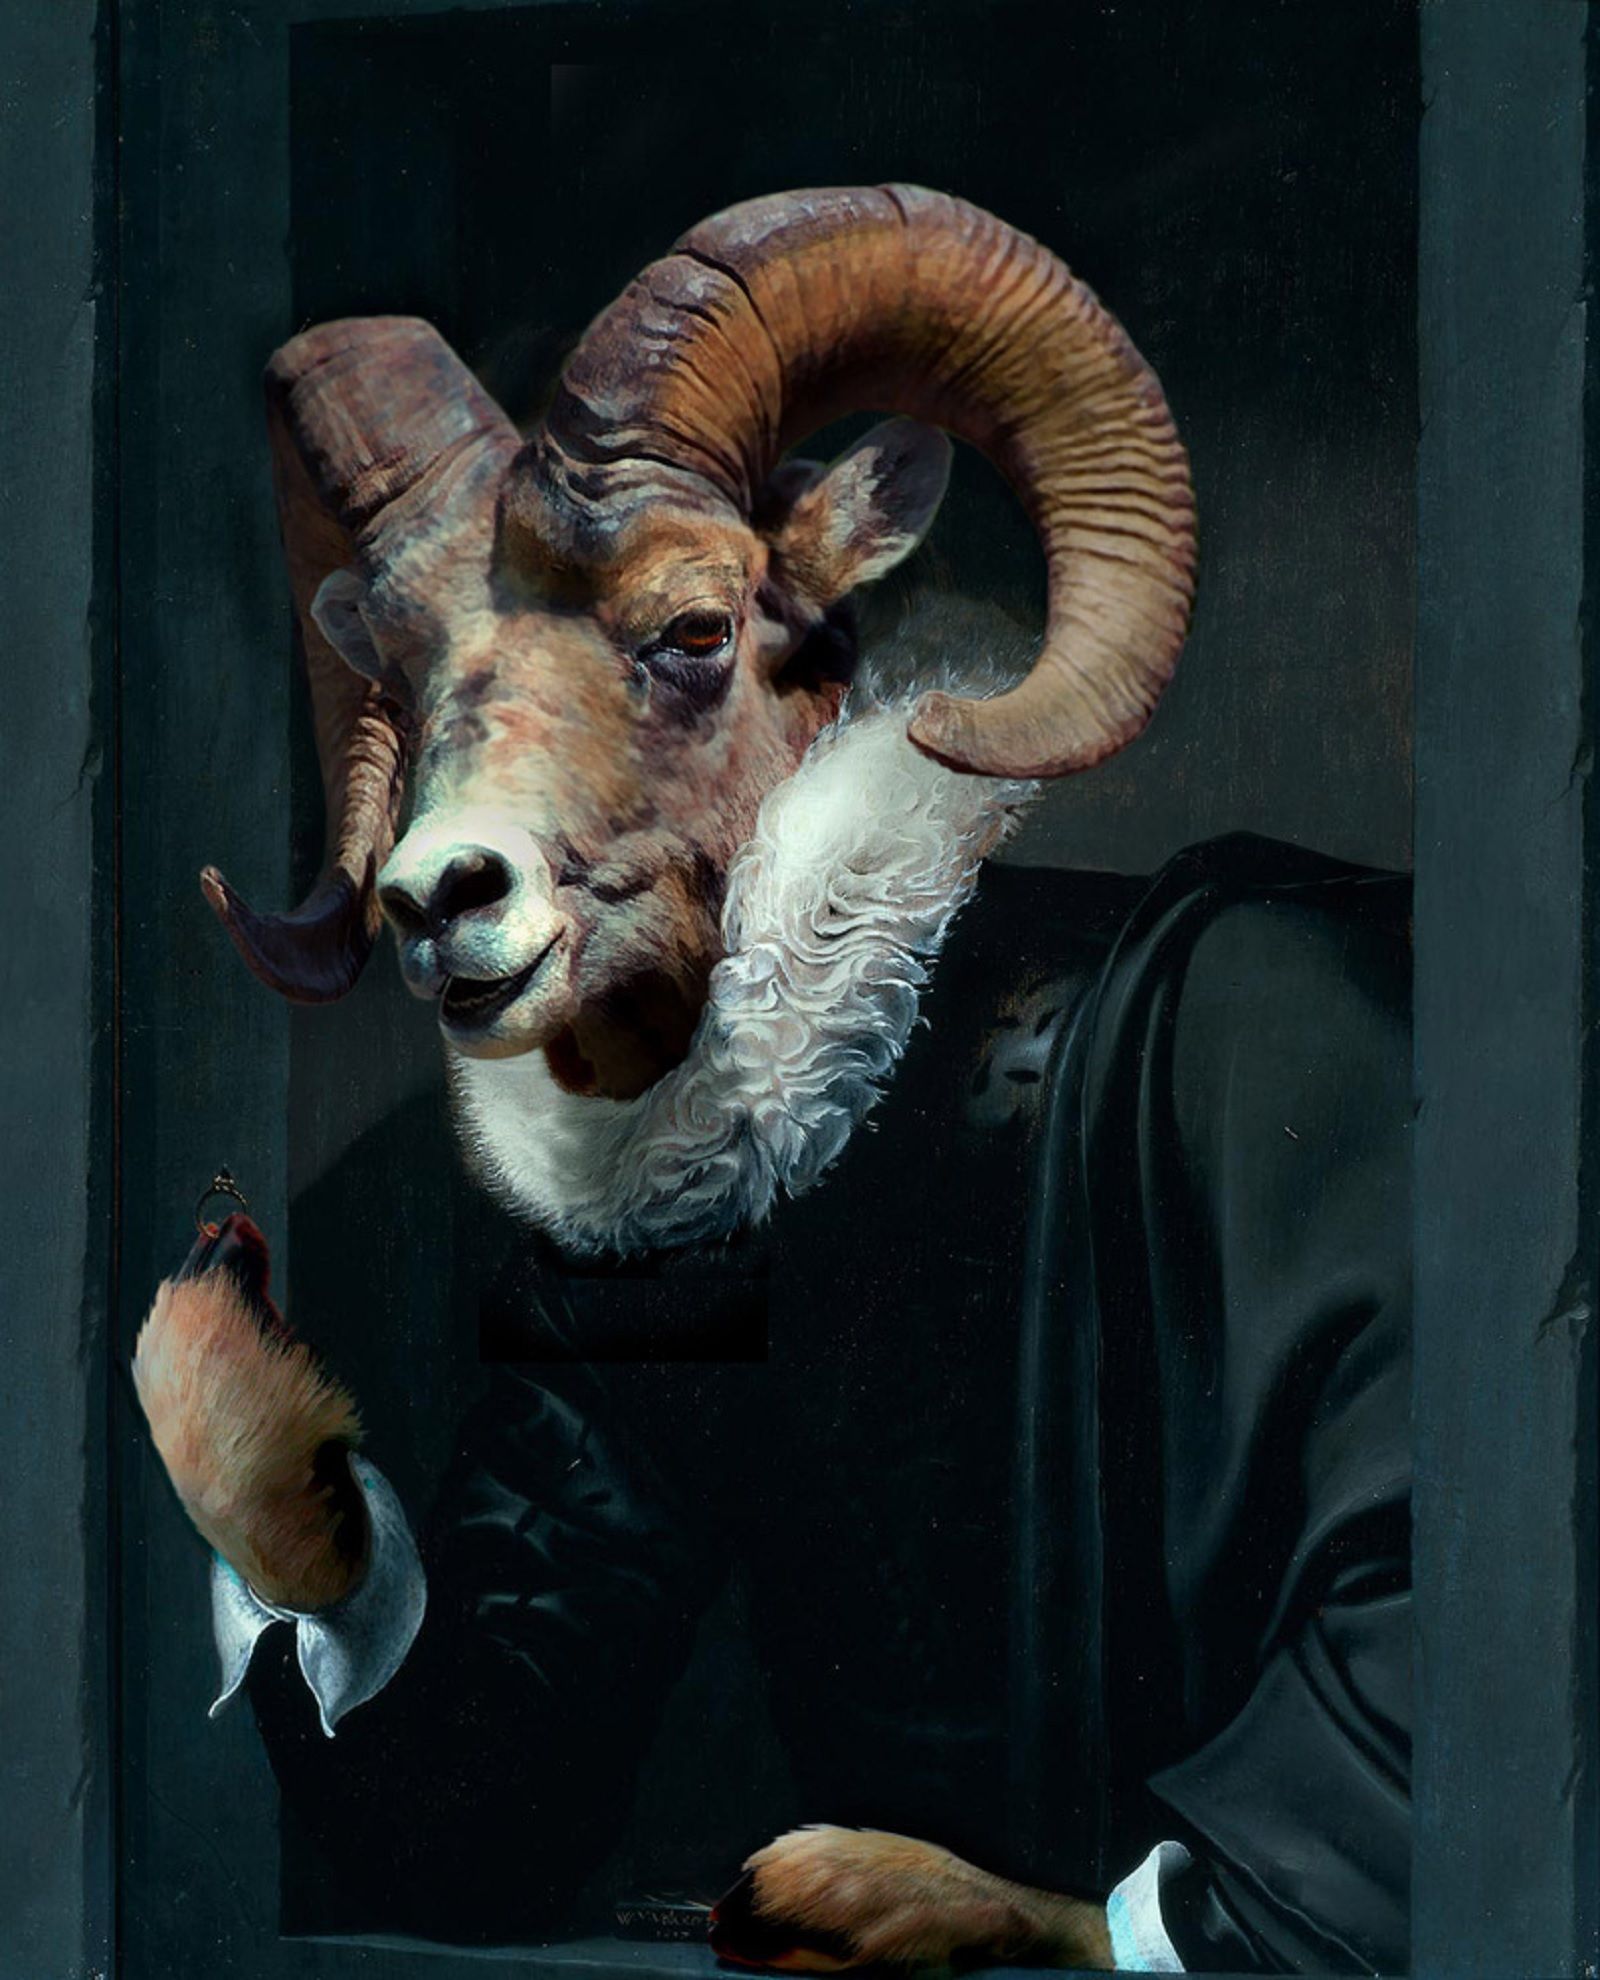 Amusing Images Of Animals Photoshopped Into Renaissance Paintings image 20